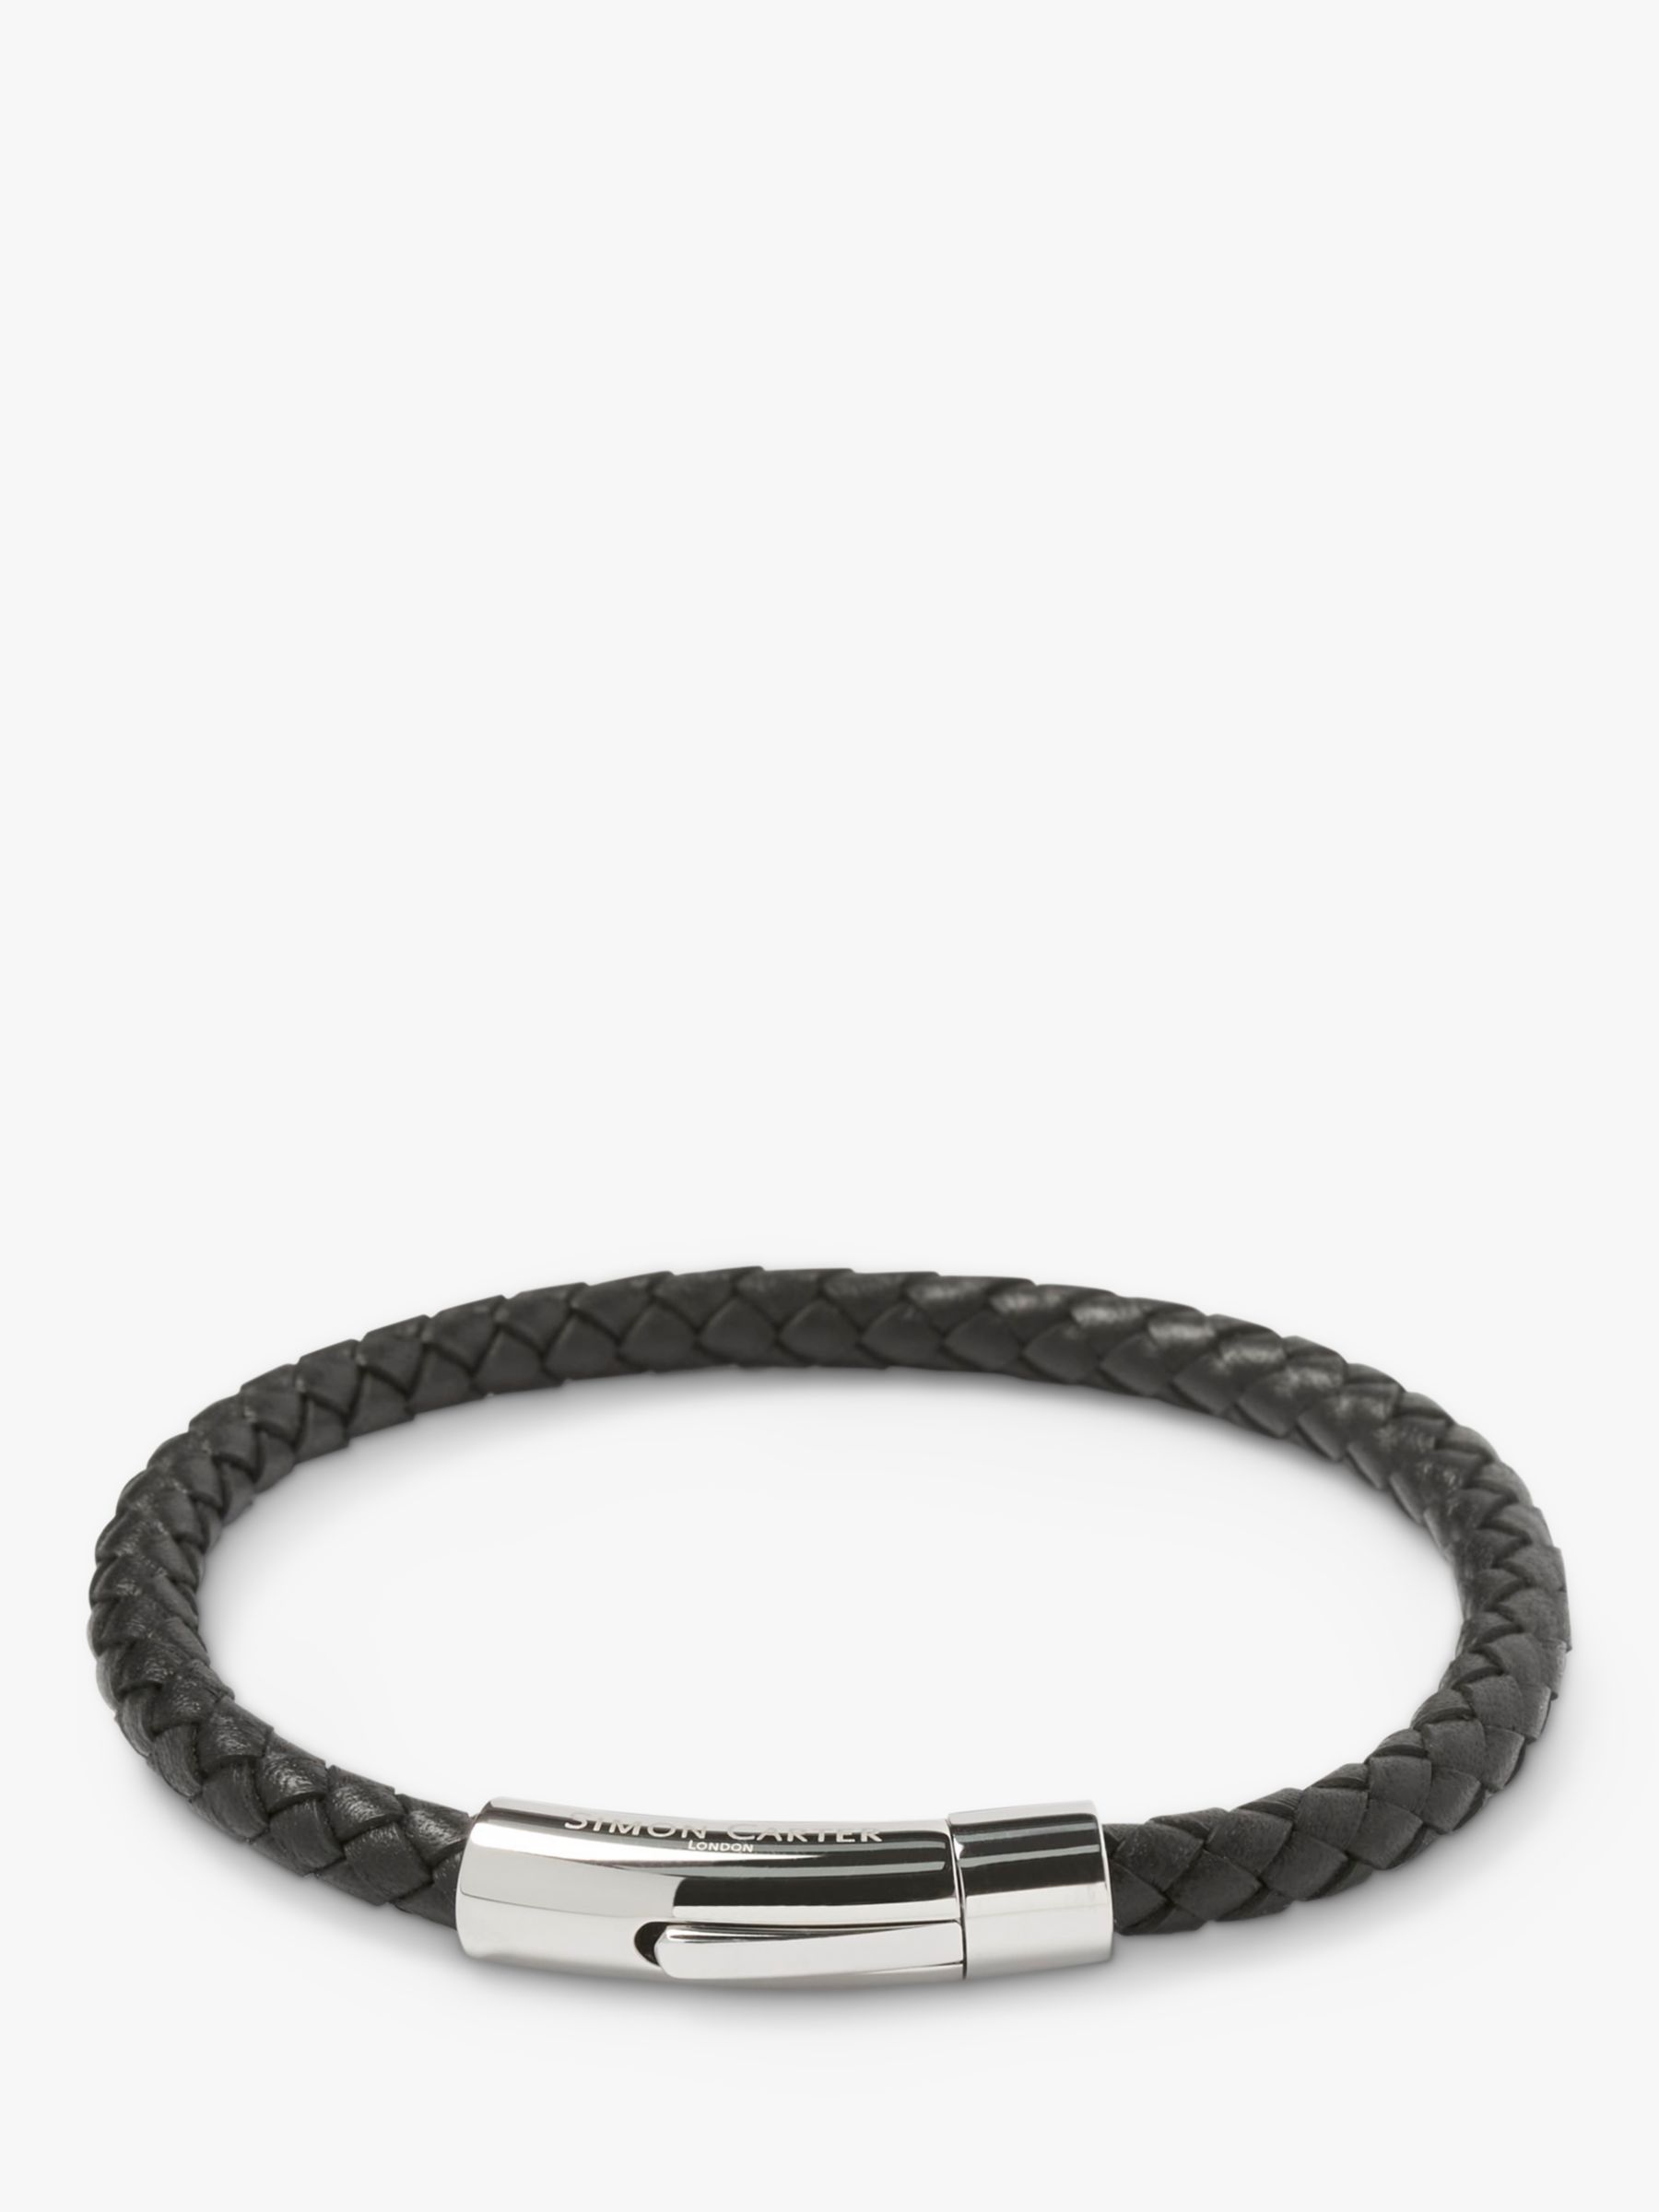 Simon Carter Newquay Men's Braided Leather Bracelet, Black, One size